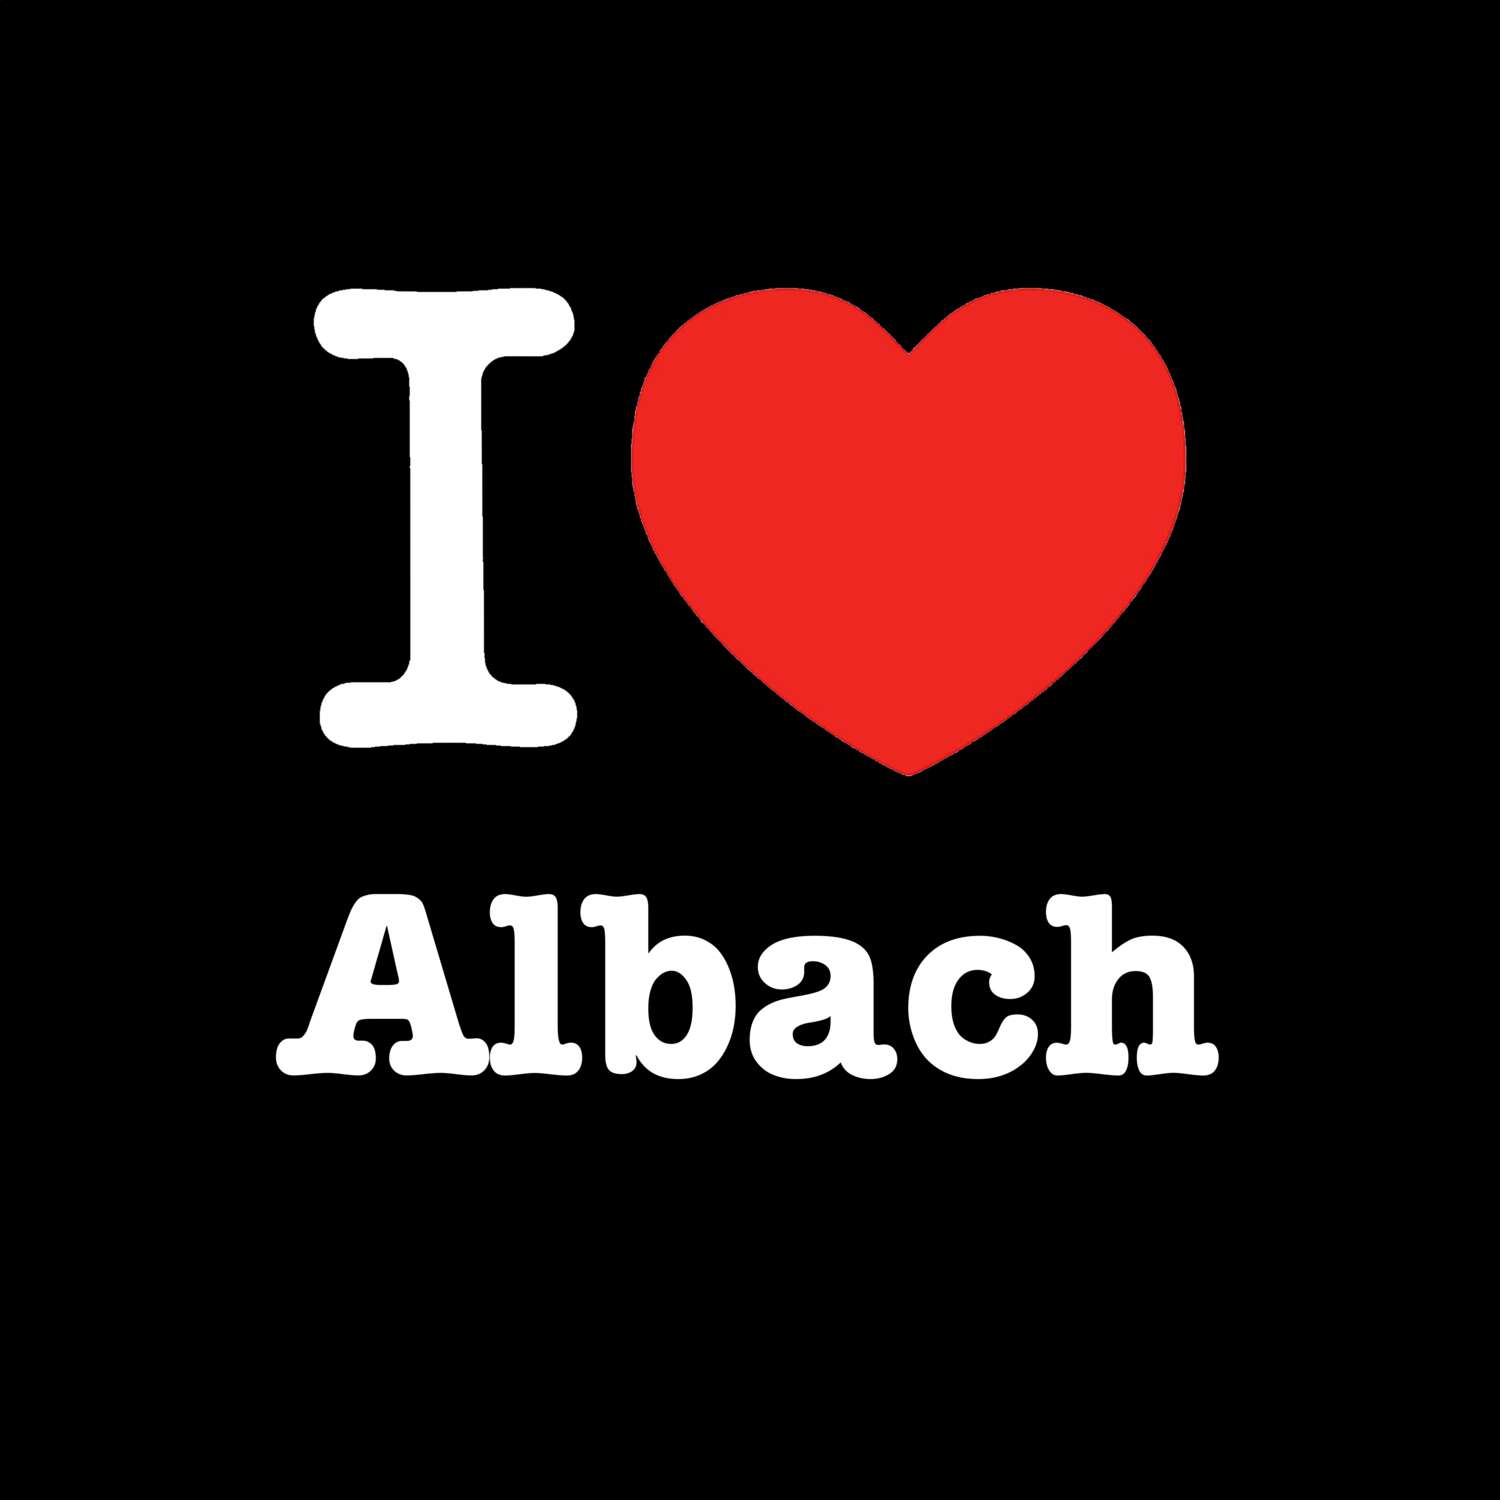 Albach T-Shirt »I love«